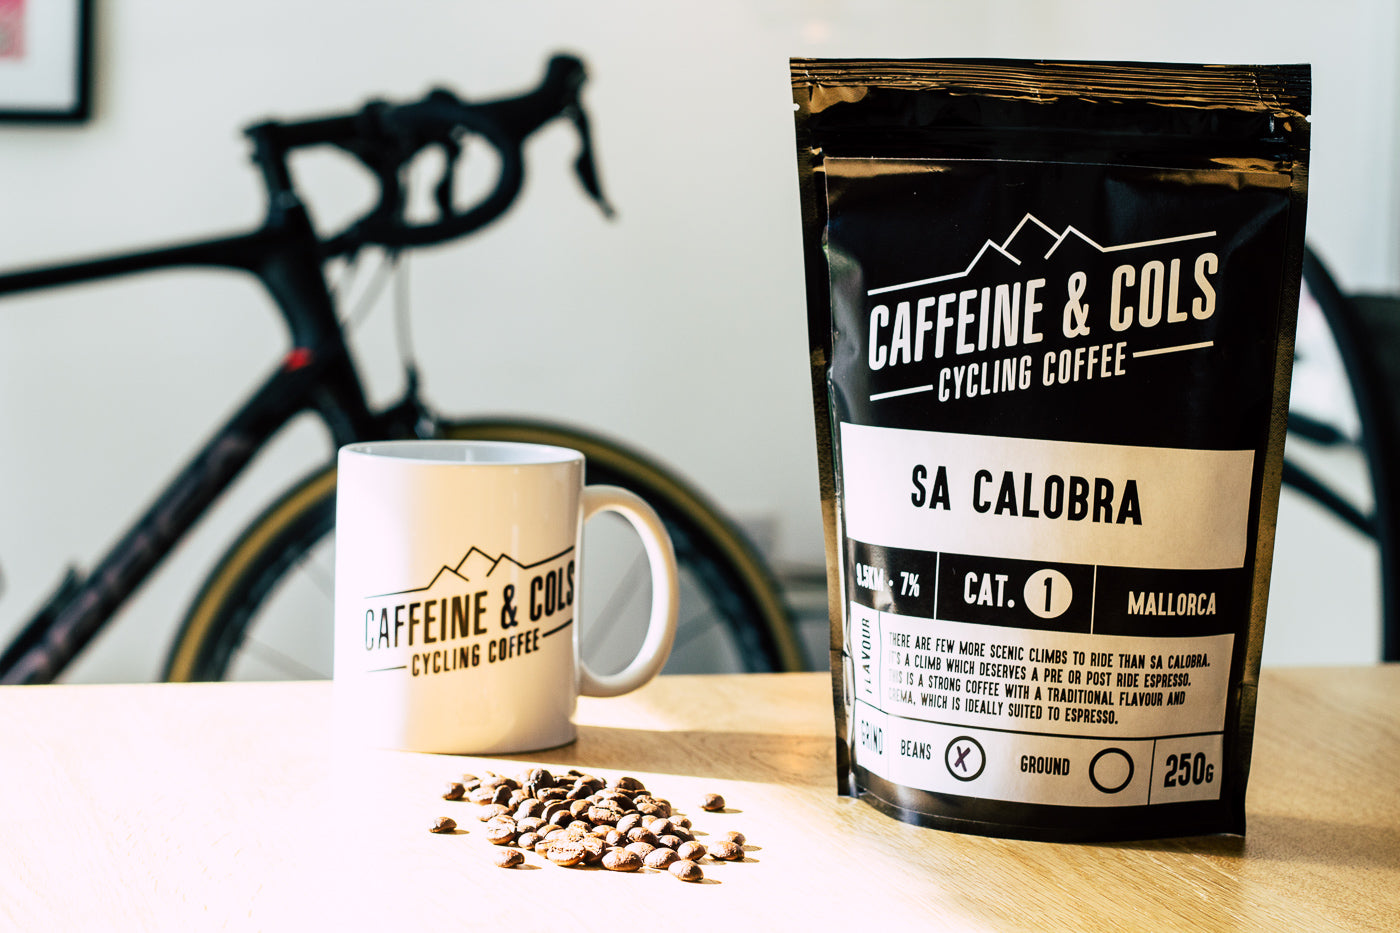 Introducing Caffeine & Cols Cycling Coffee